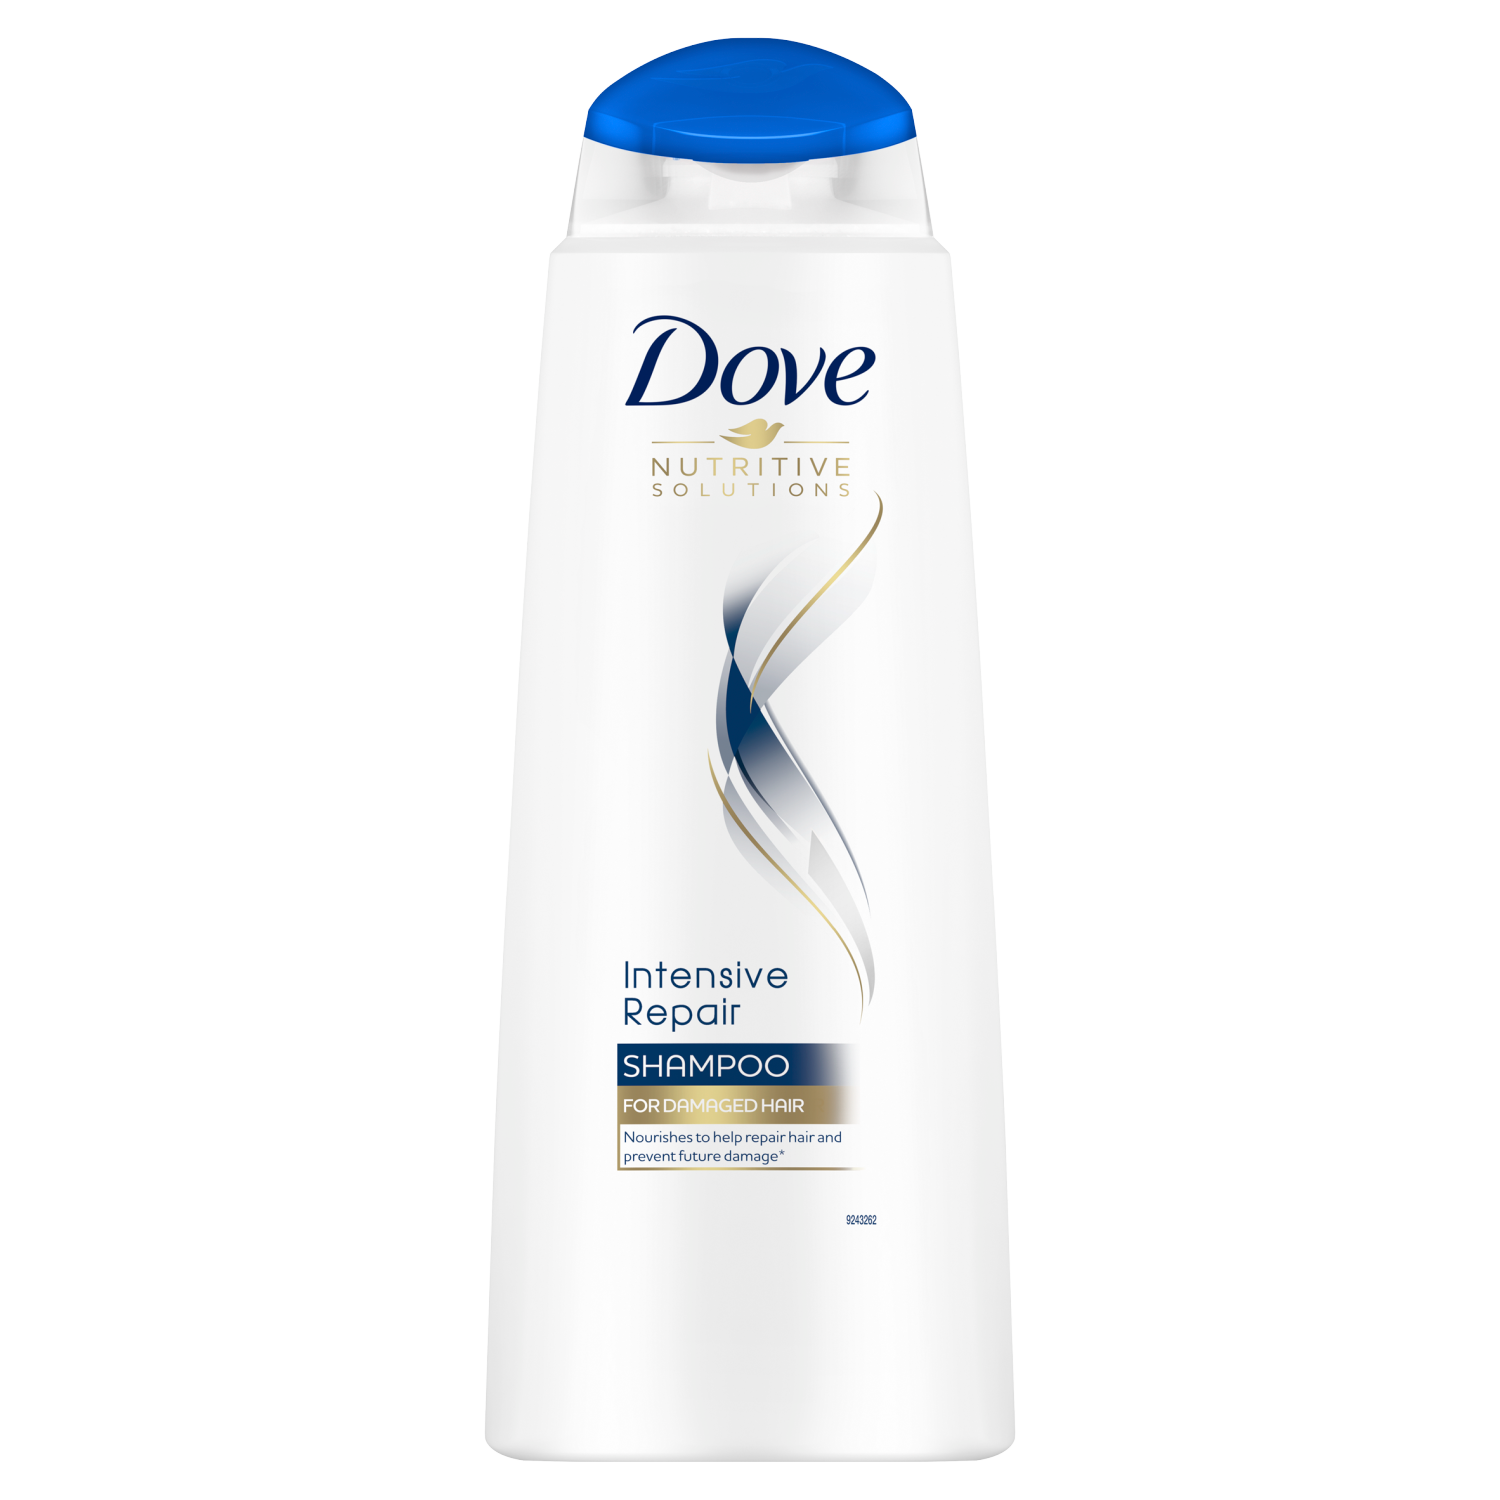 nowy szampon dove